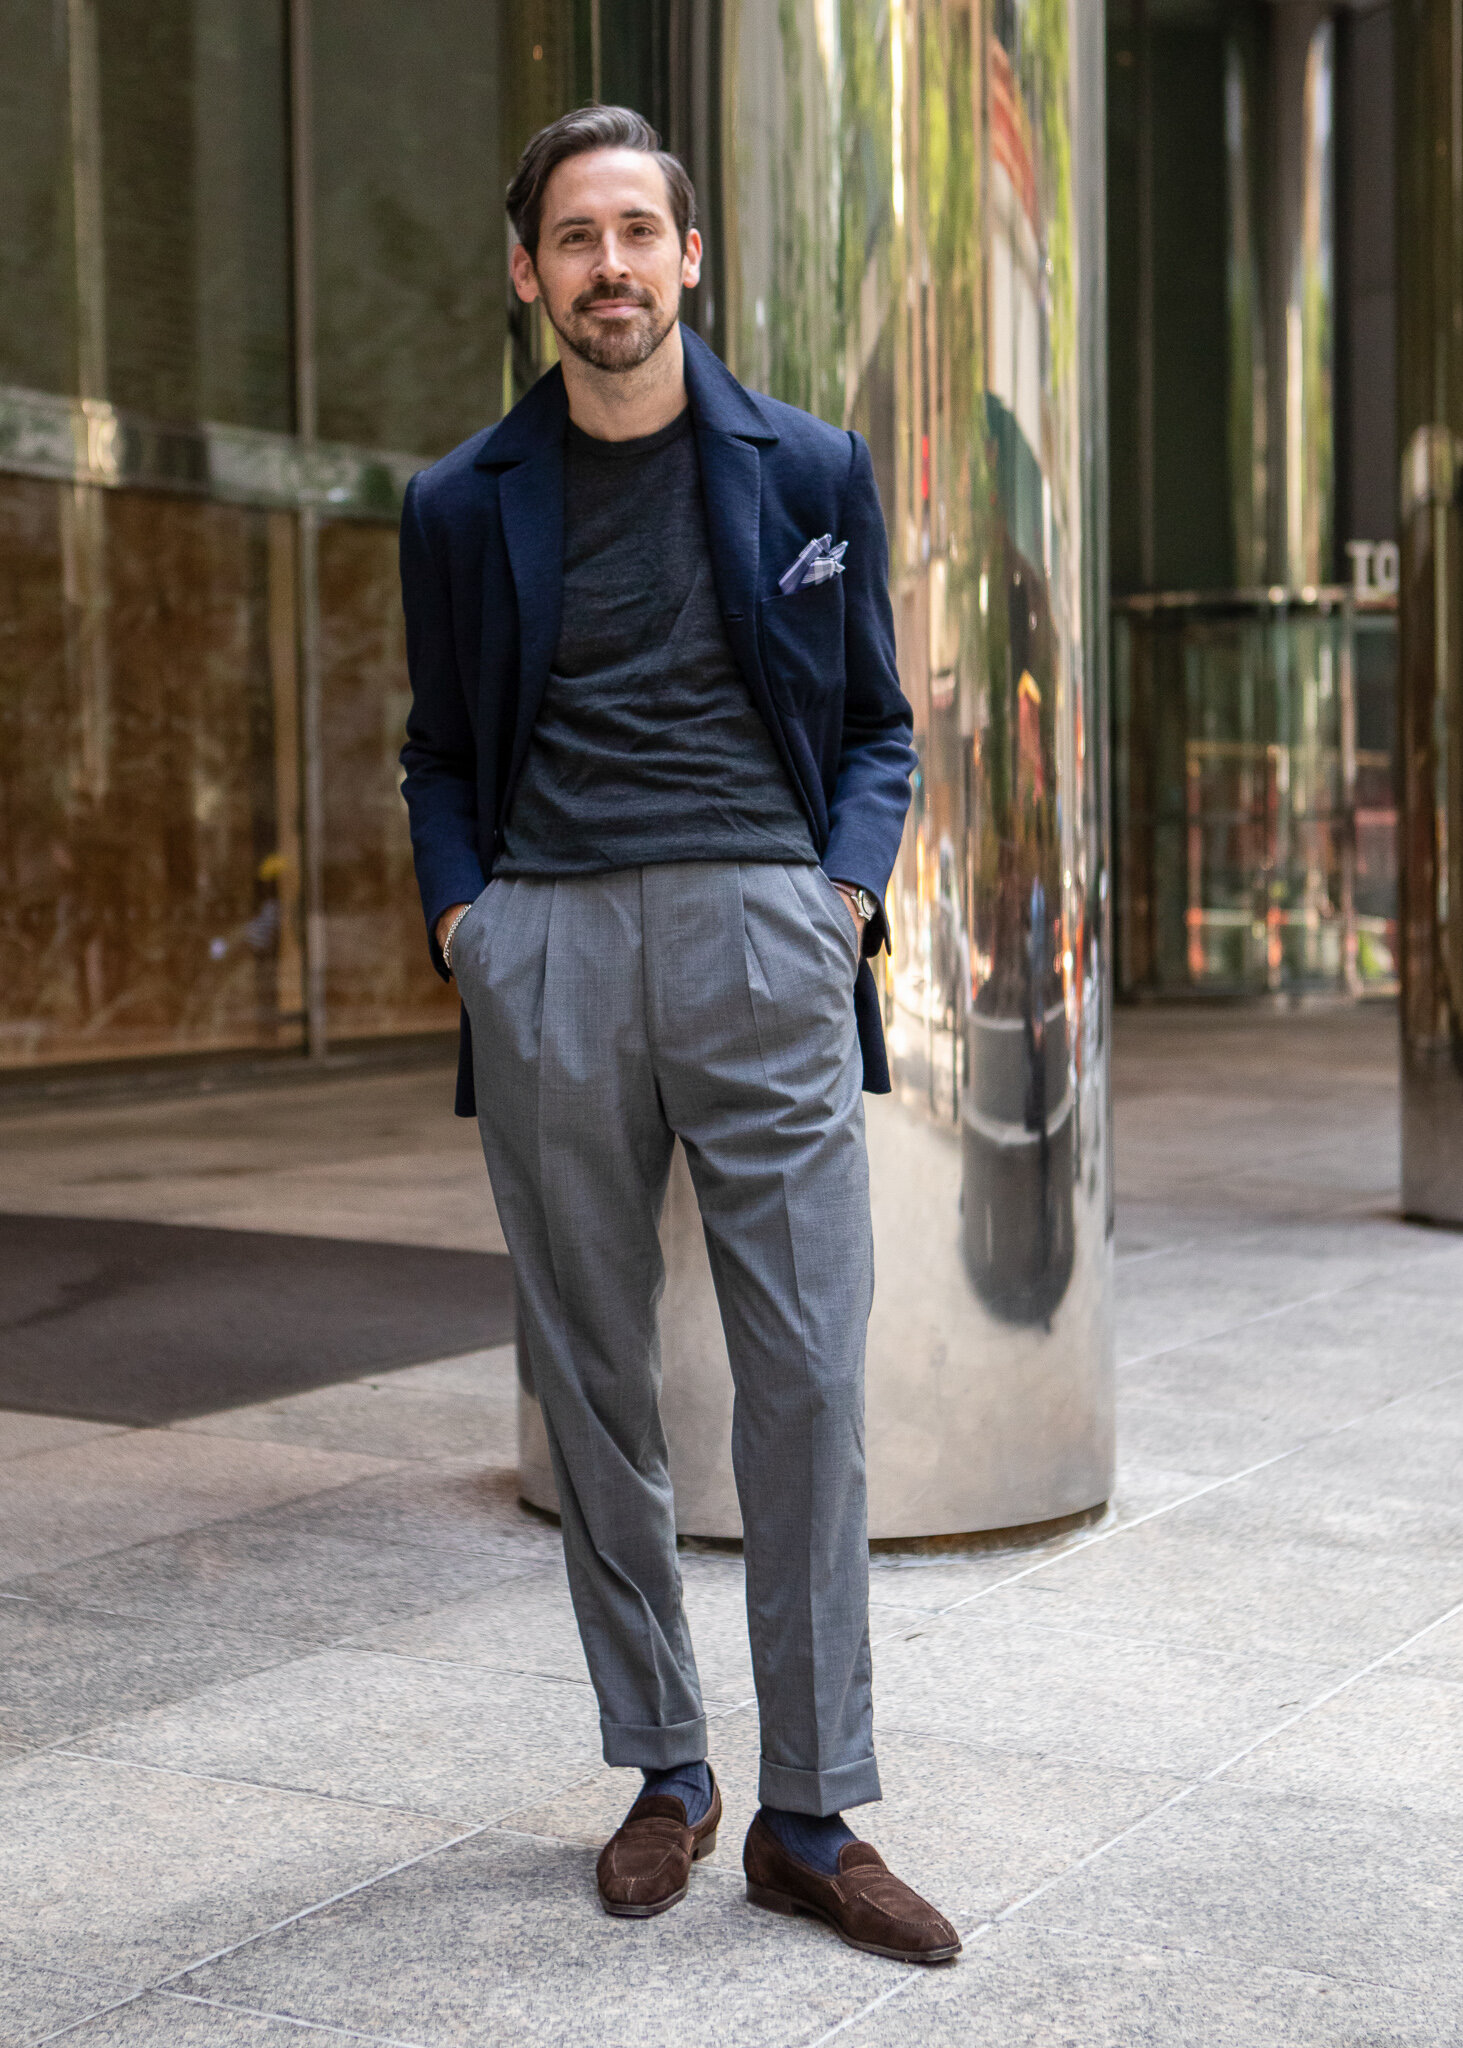 Classy Grey Blazer Outfit Ideas for Men  Grey Blazer Combination   TiptopGents